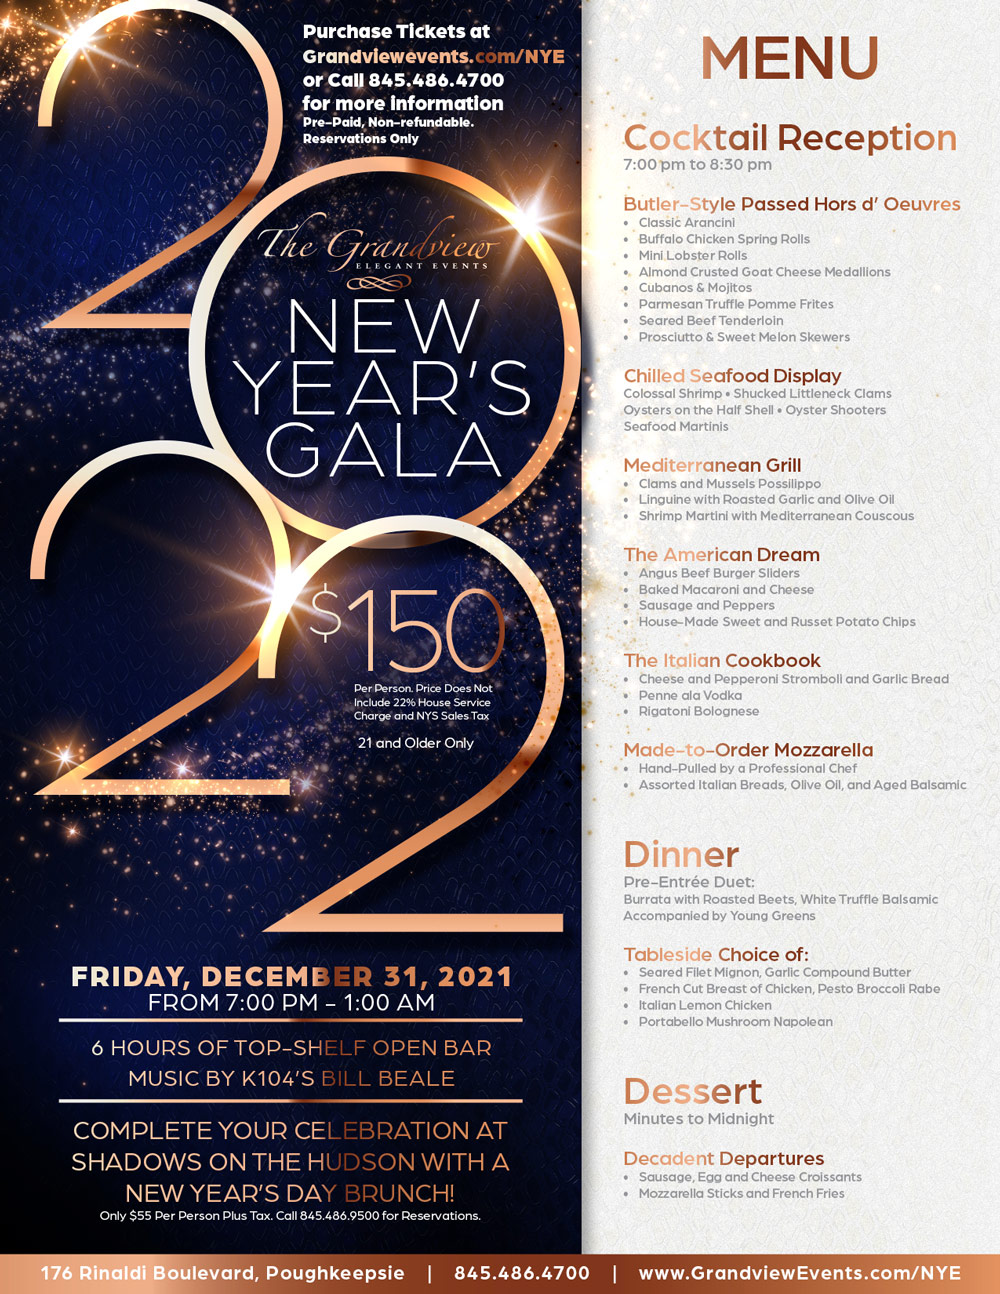 The Grandview New Year's Eve Gala Menu Flyer